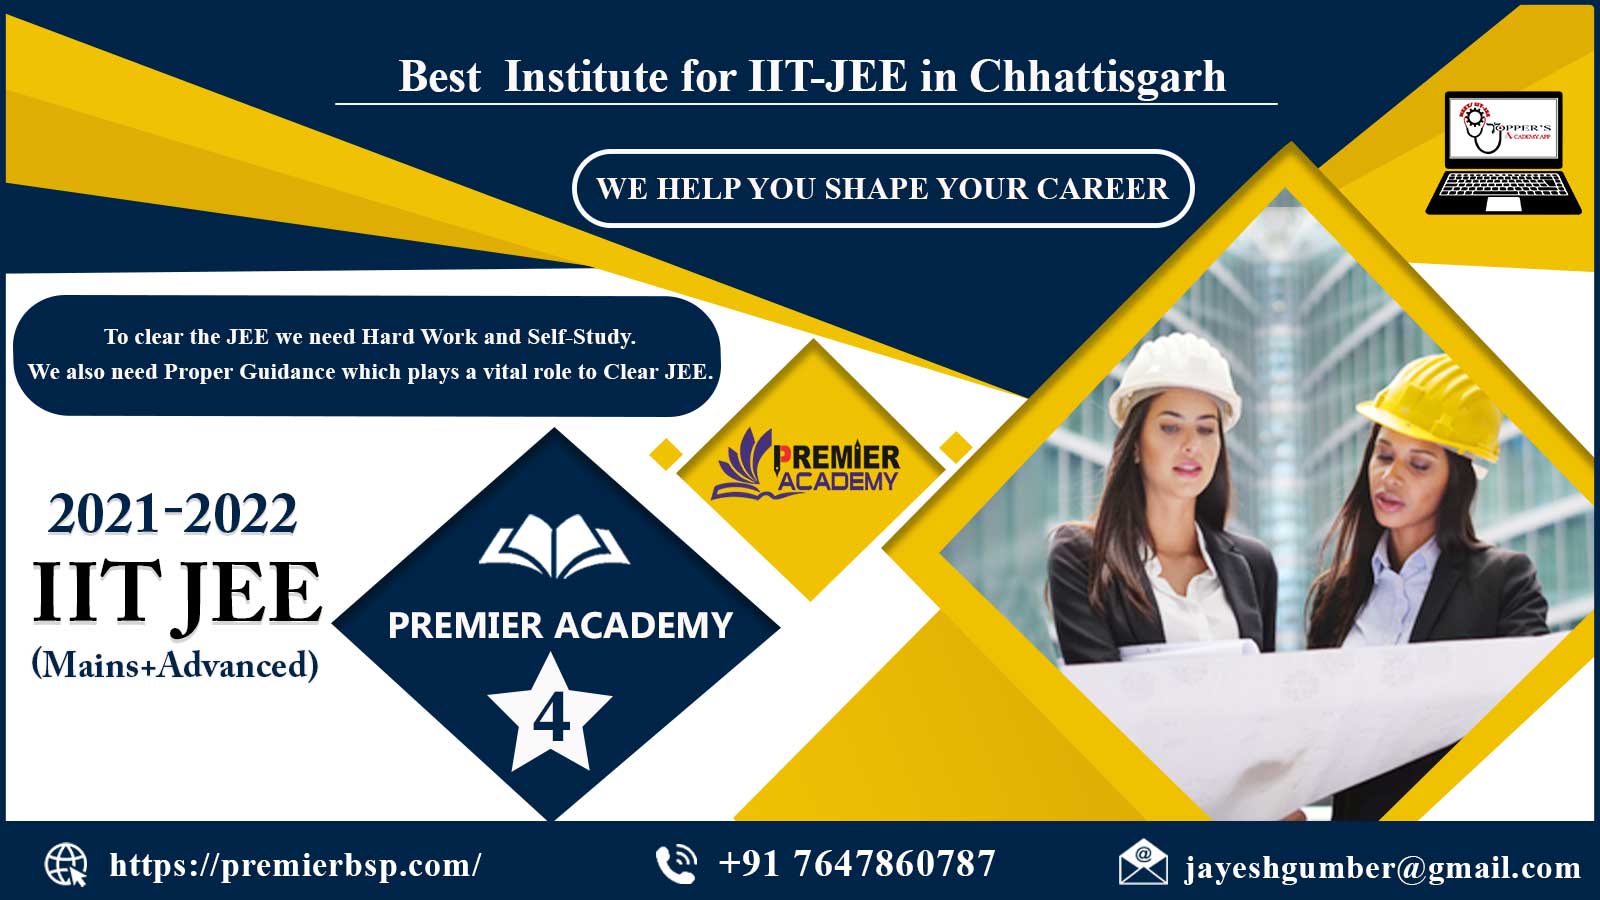 Premier Academy IIT JEE Coaching in Chhattisgarh